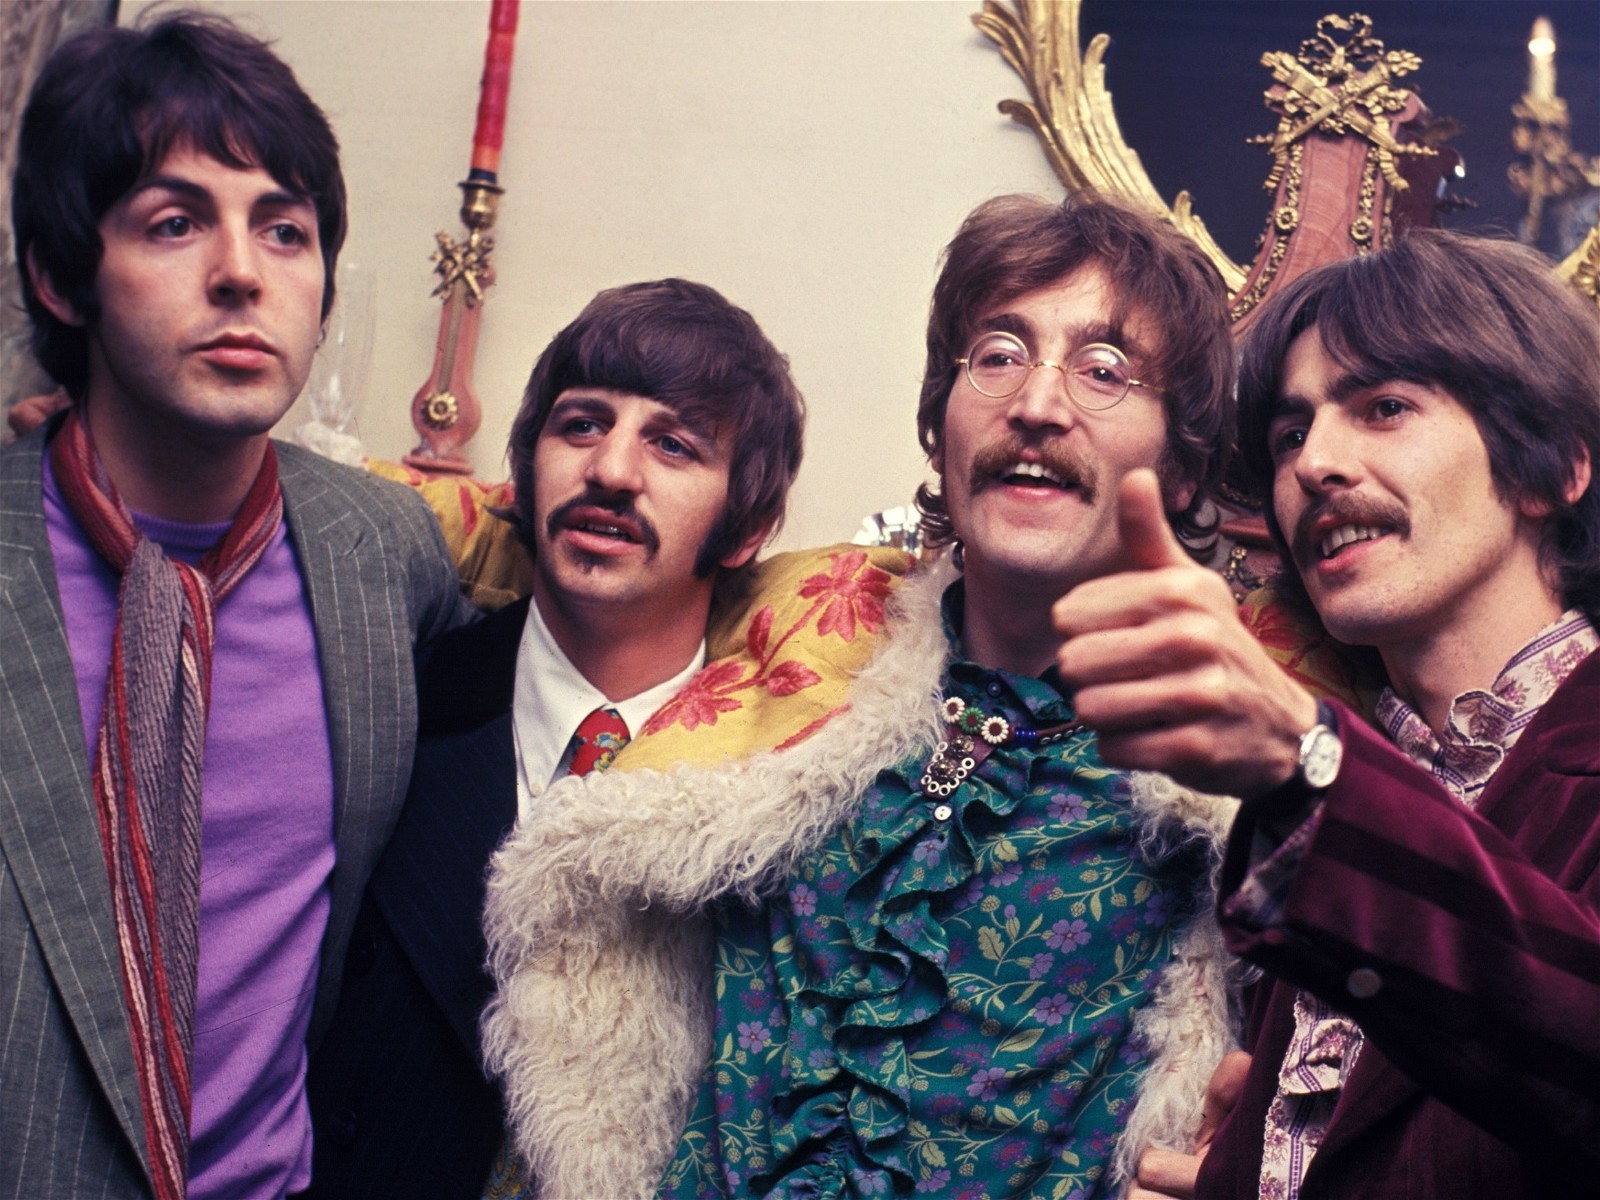 John Lennon, Paul McCartney, George Harrison, and Ringo Starr